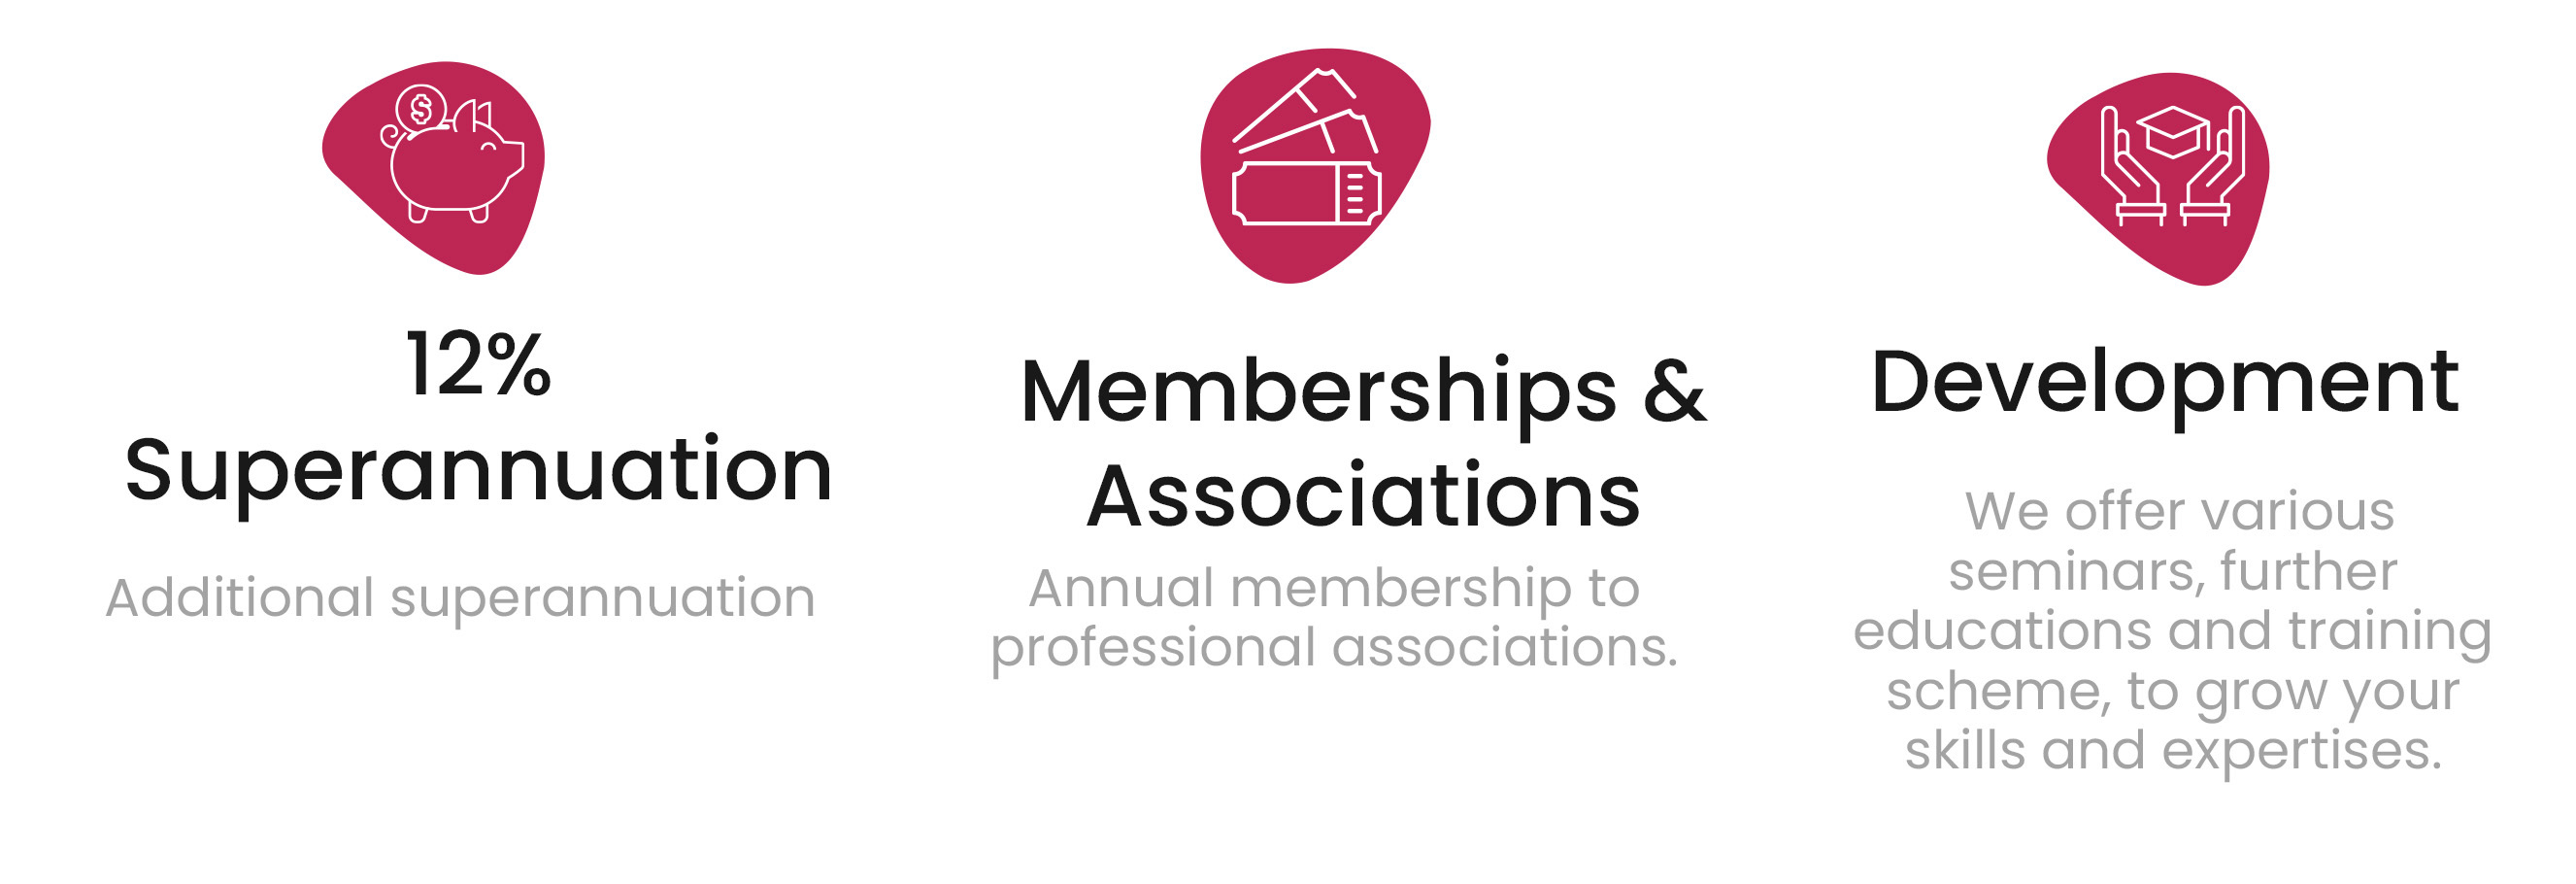 Superannuation, annual memberships & associations, seminars & training